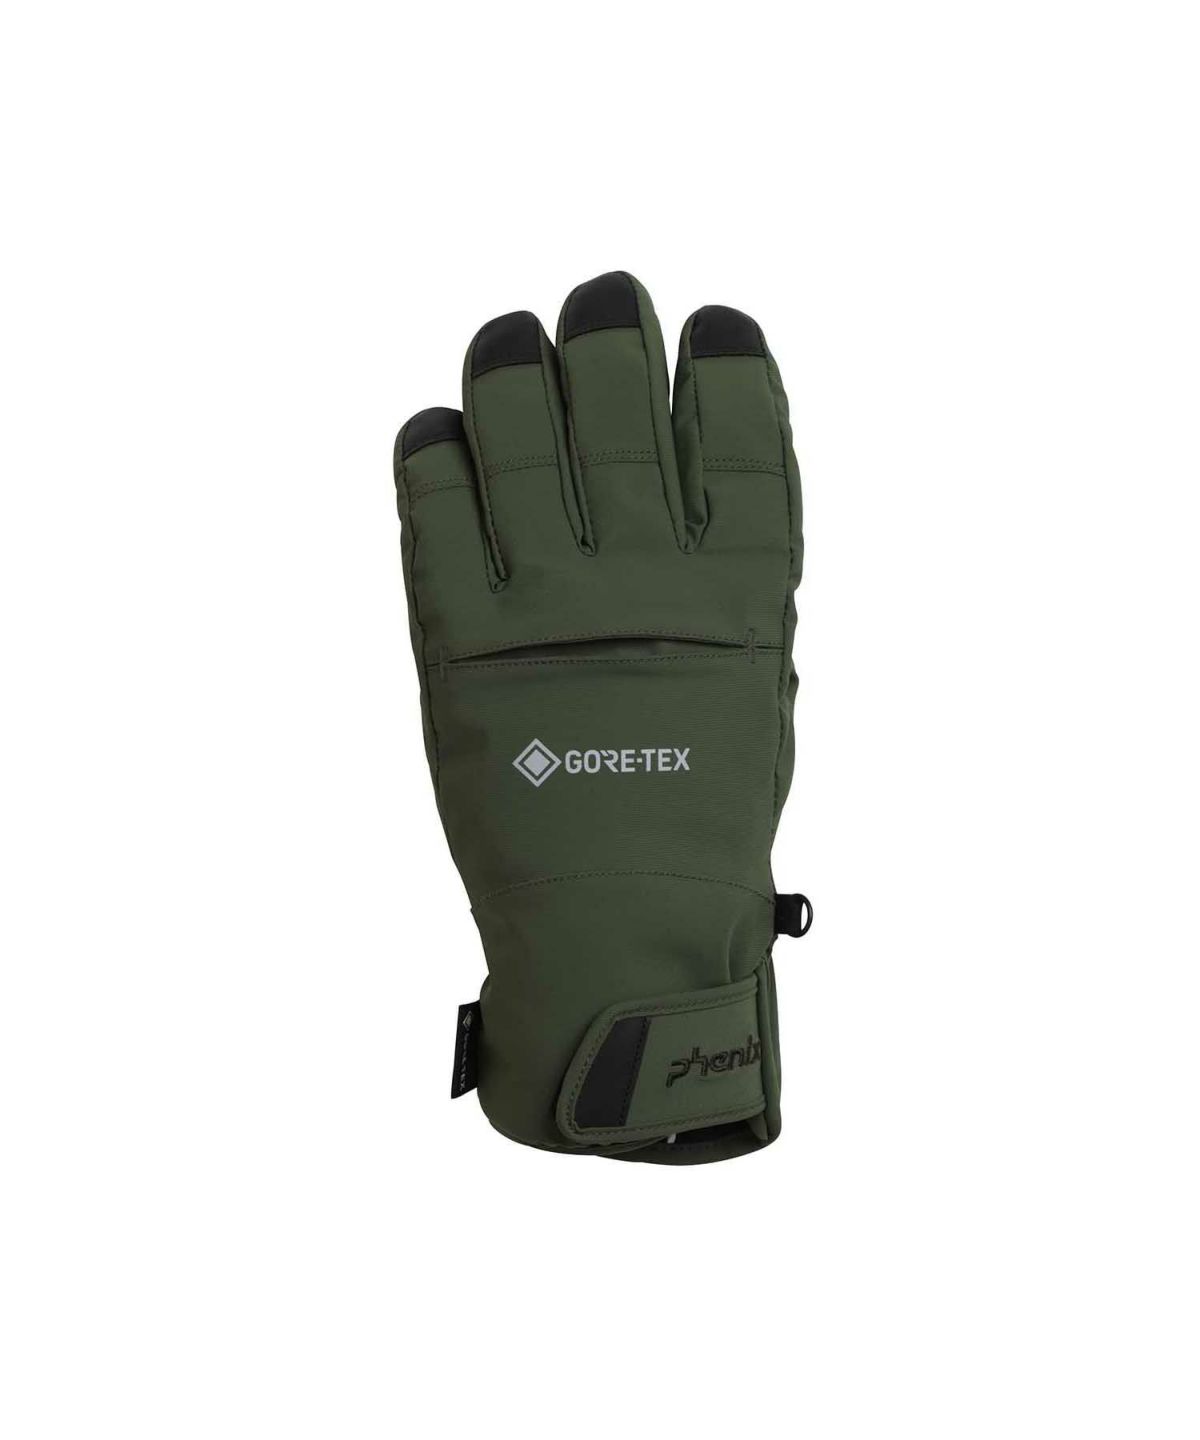 phenix(フェニックス)Thunderbolt Gloves メンズ/スキー/グローブ/手袋 